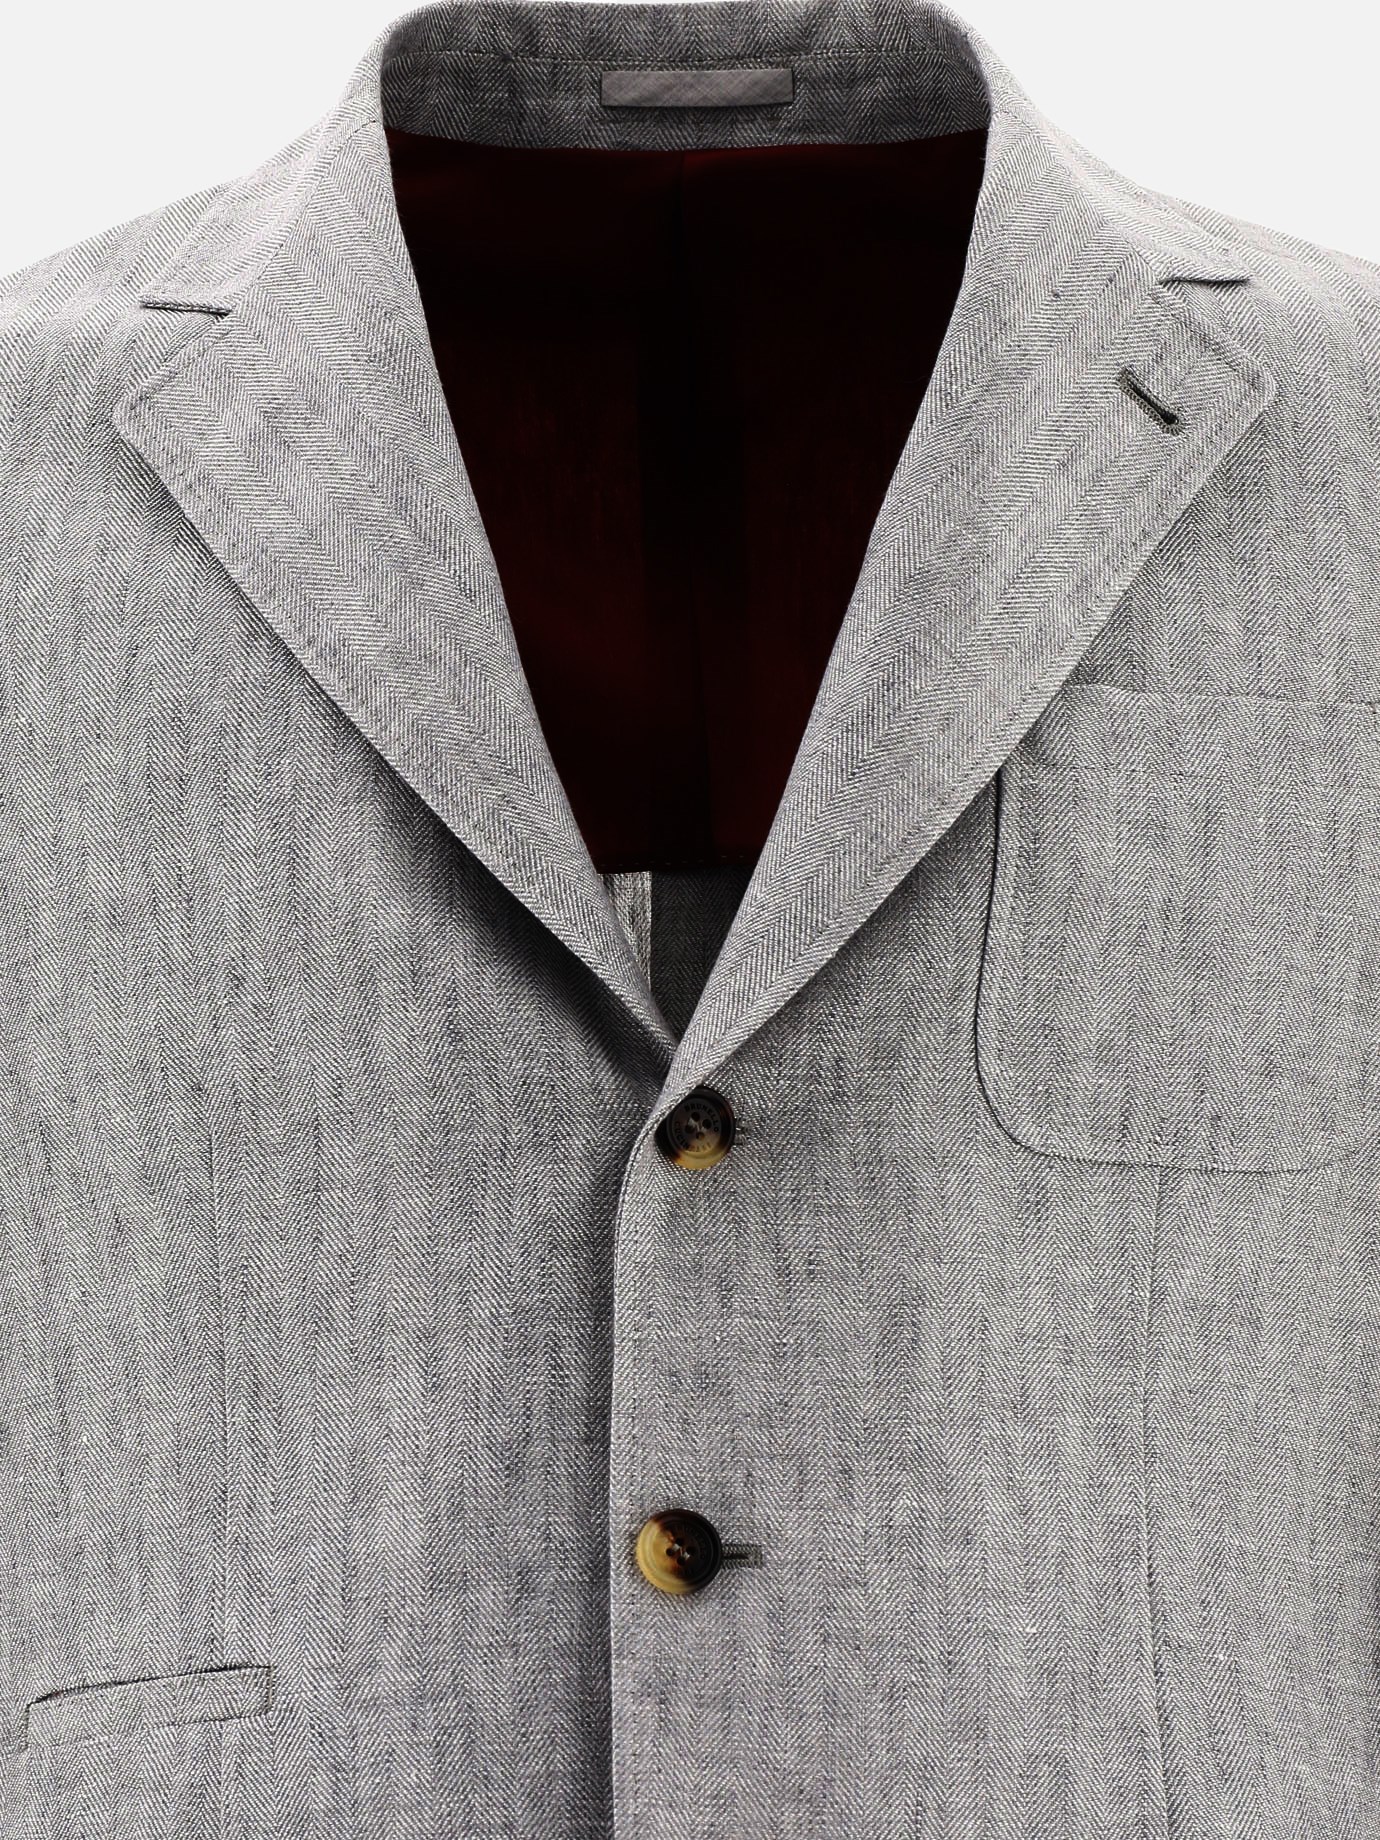 Single-breasted herringbone suit by Brunello Cucinelli